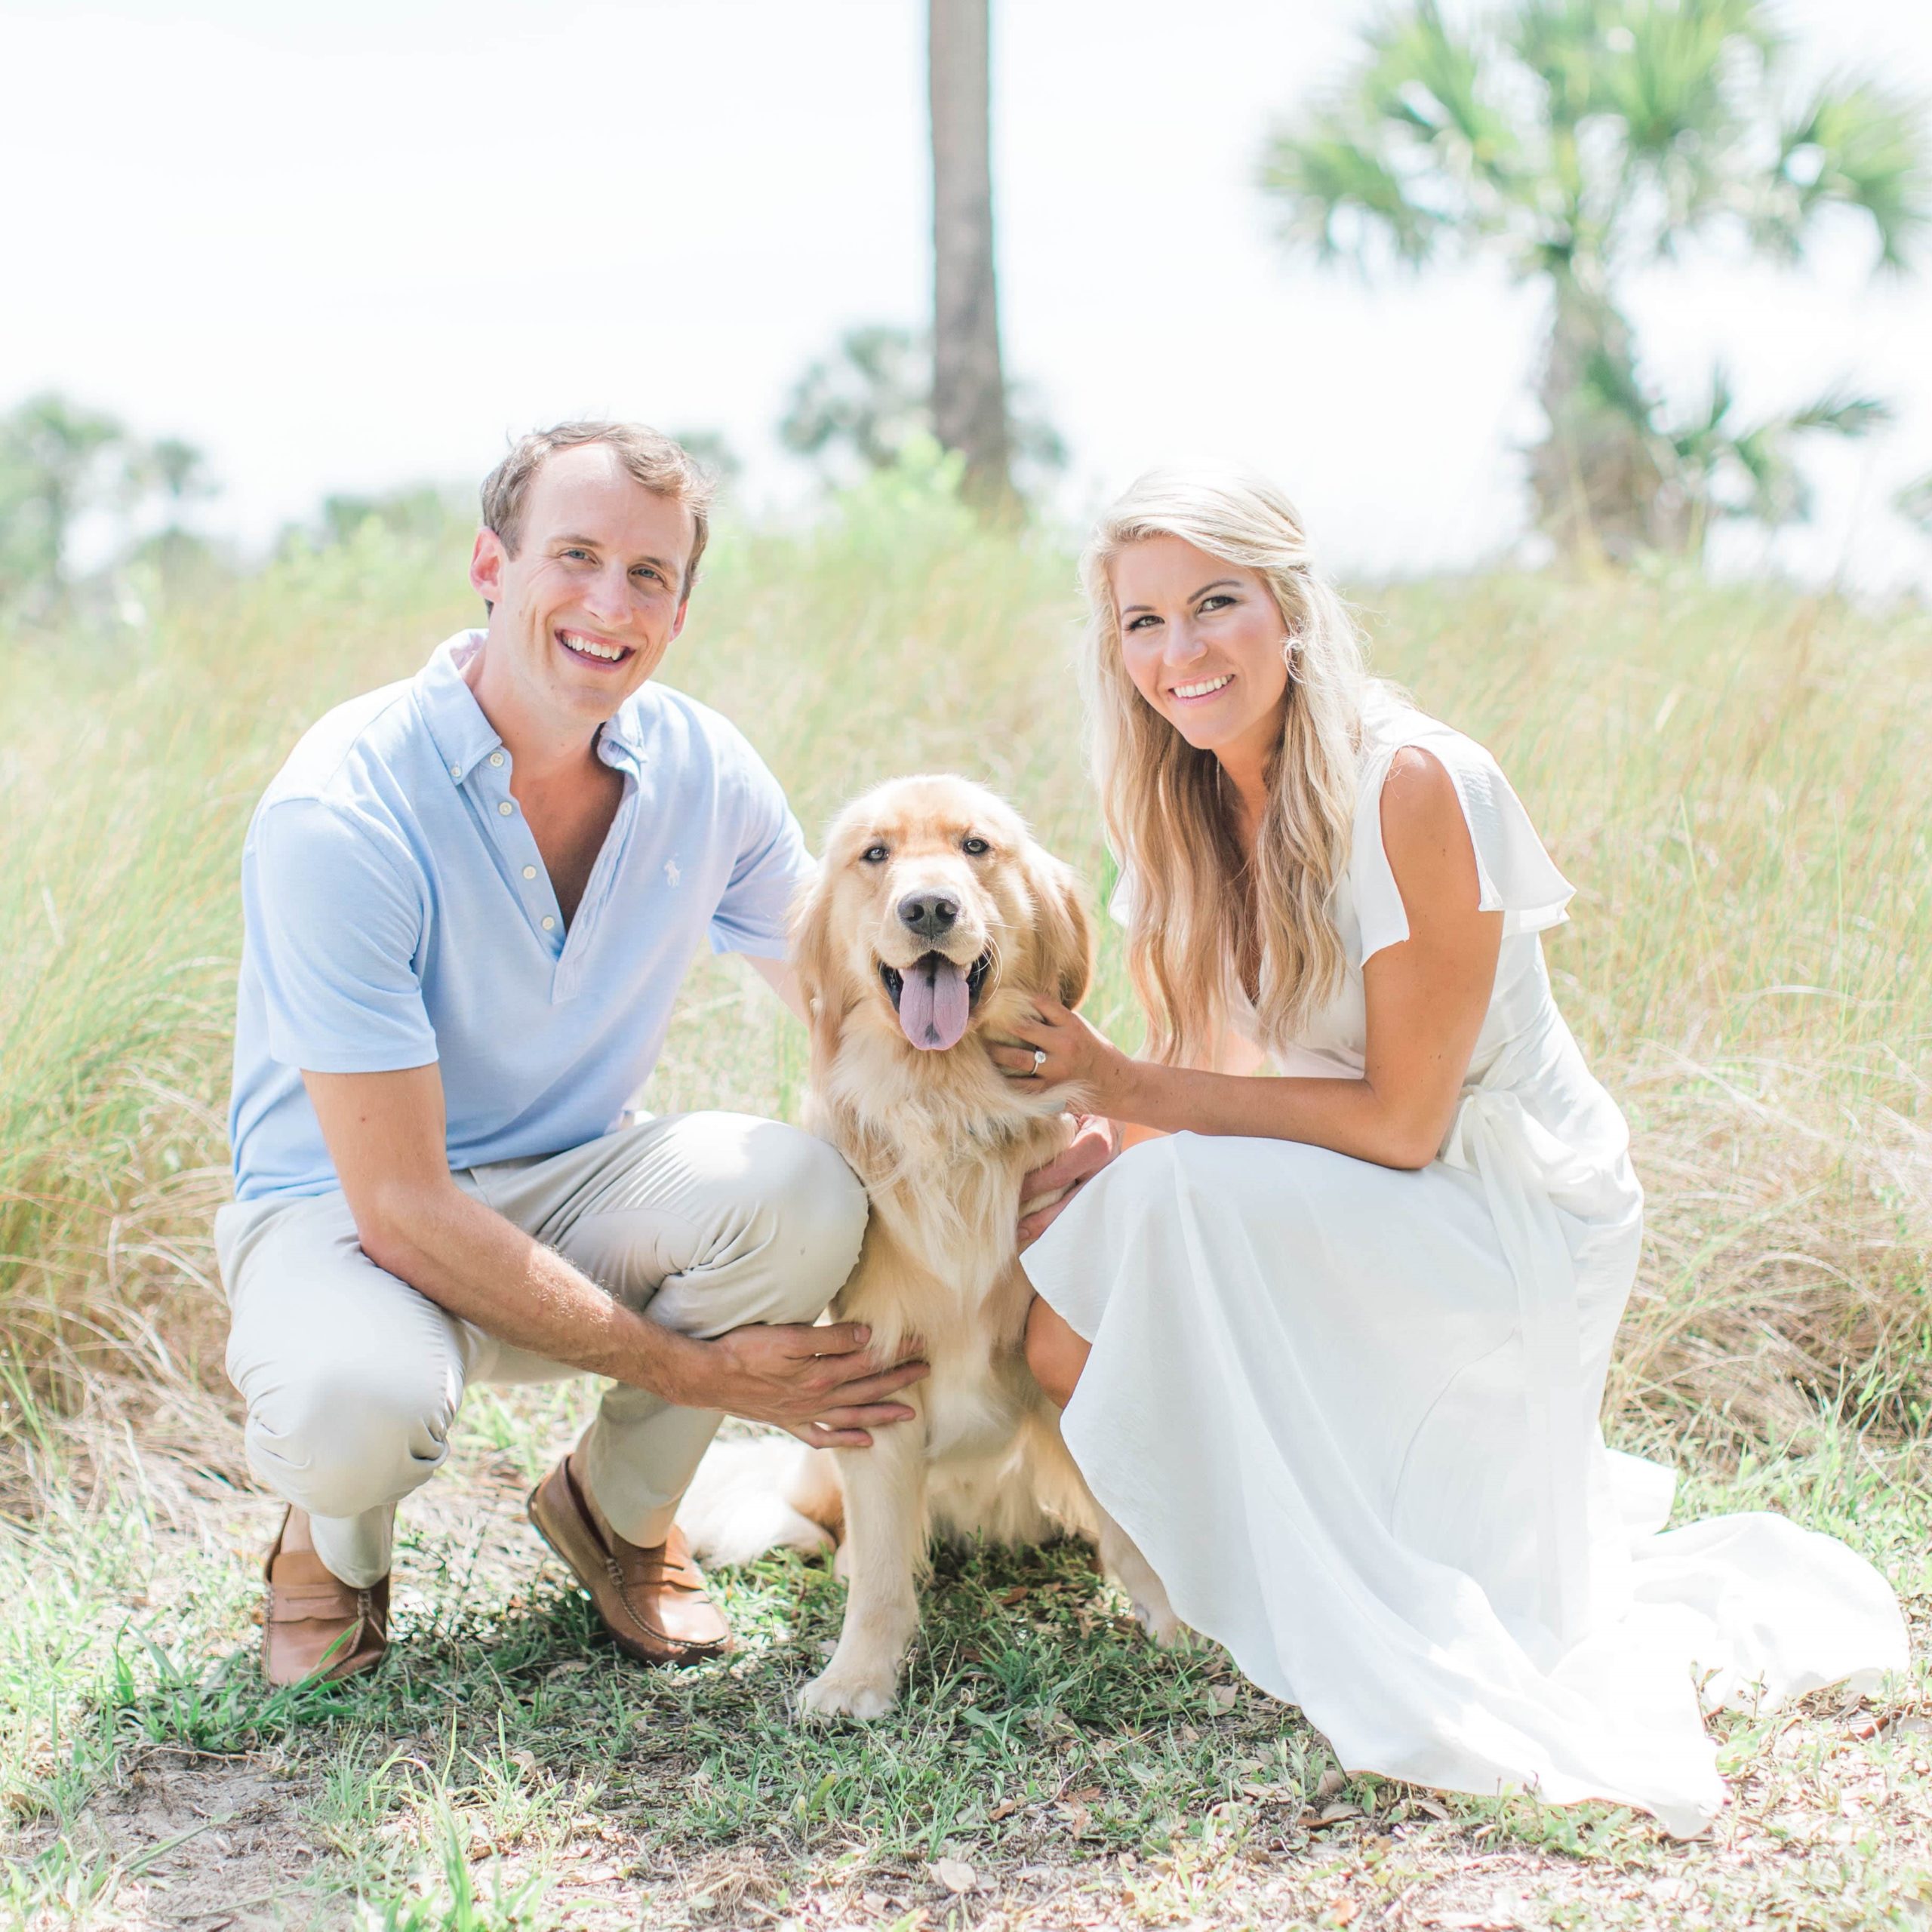 Charleston Wedding Photographer | Seabrook Island Wedding Photographer | Seabrook Island Engagement Session | Charleston Engagement Photographer | Charleston Anniversary Photographer | Engagement Session with Dog